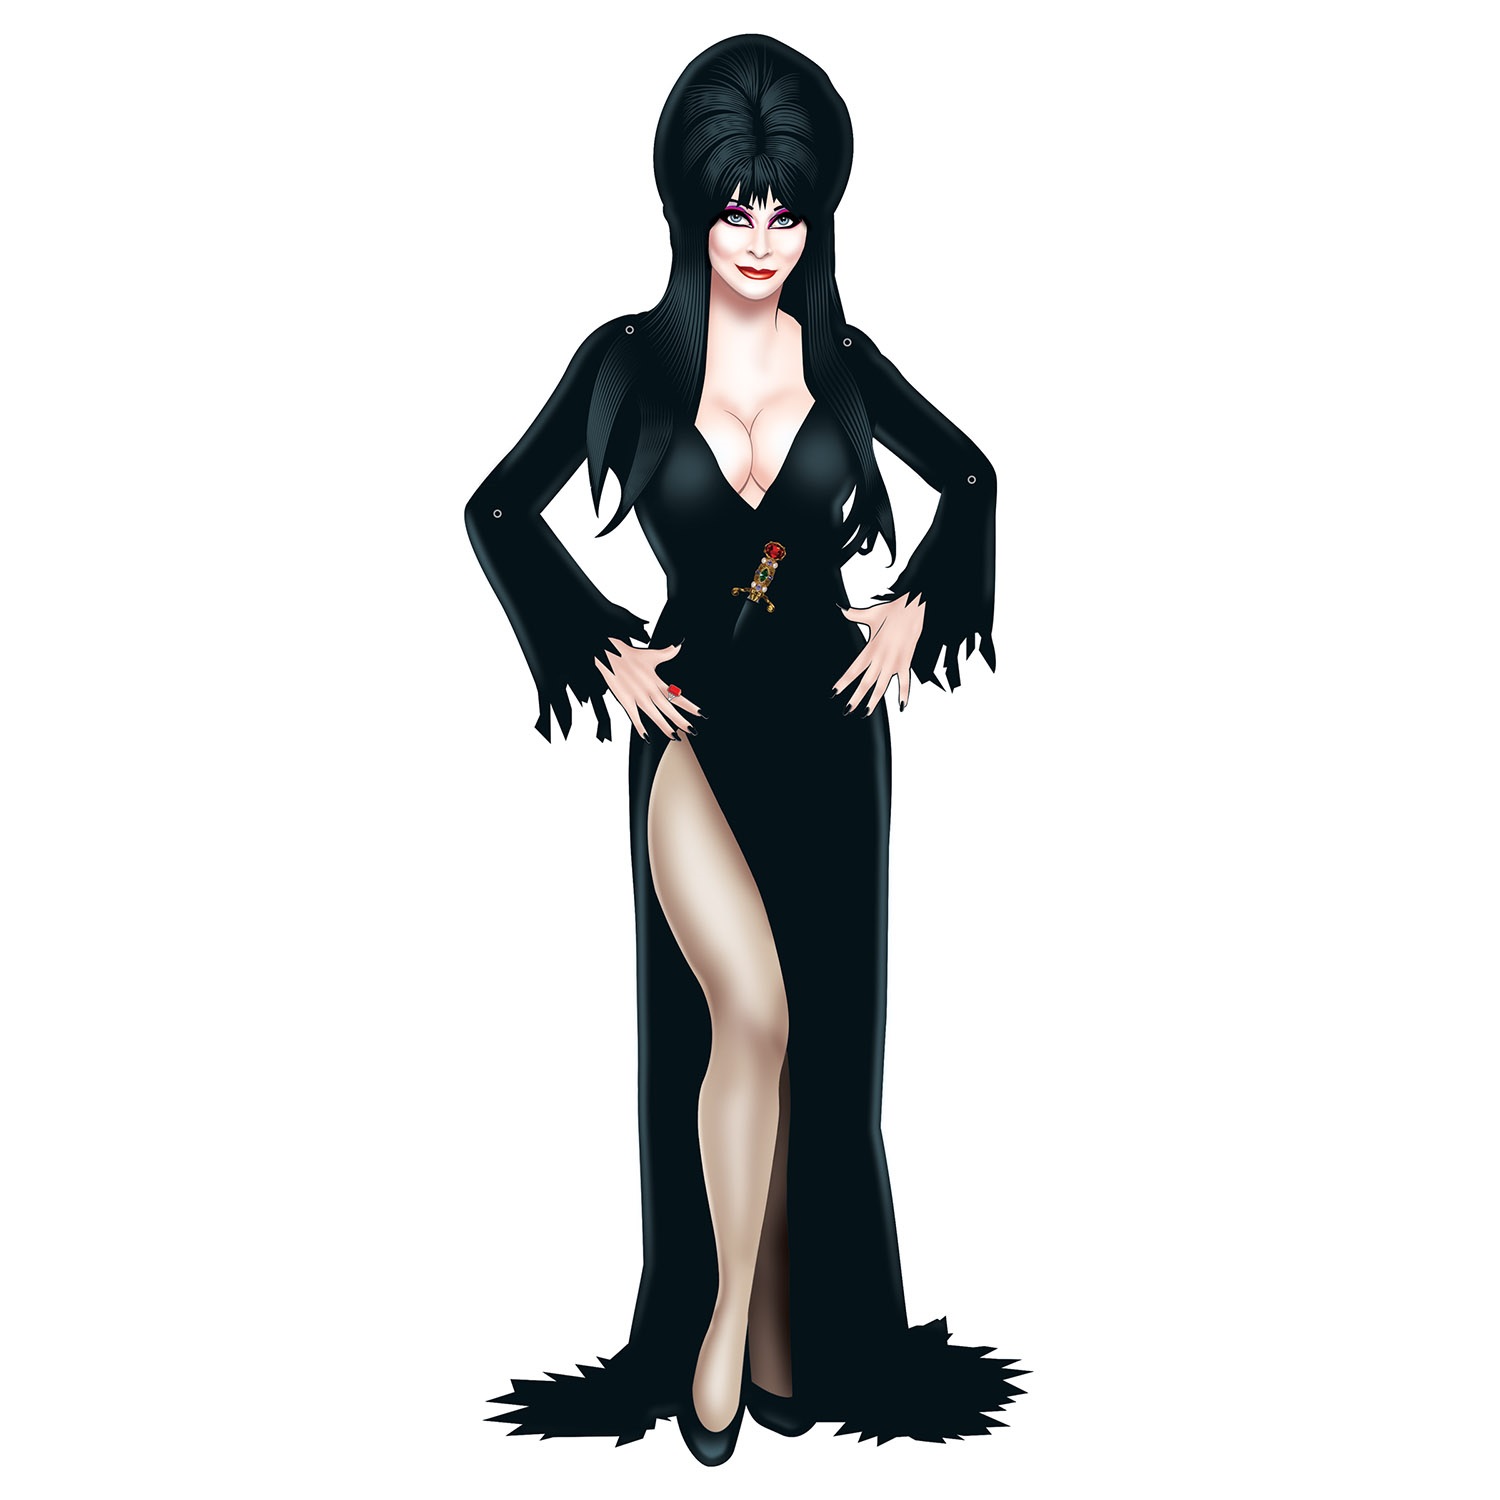 Elvira - herrscherin der dunkelheit